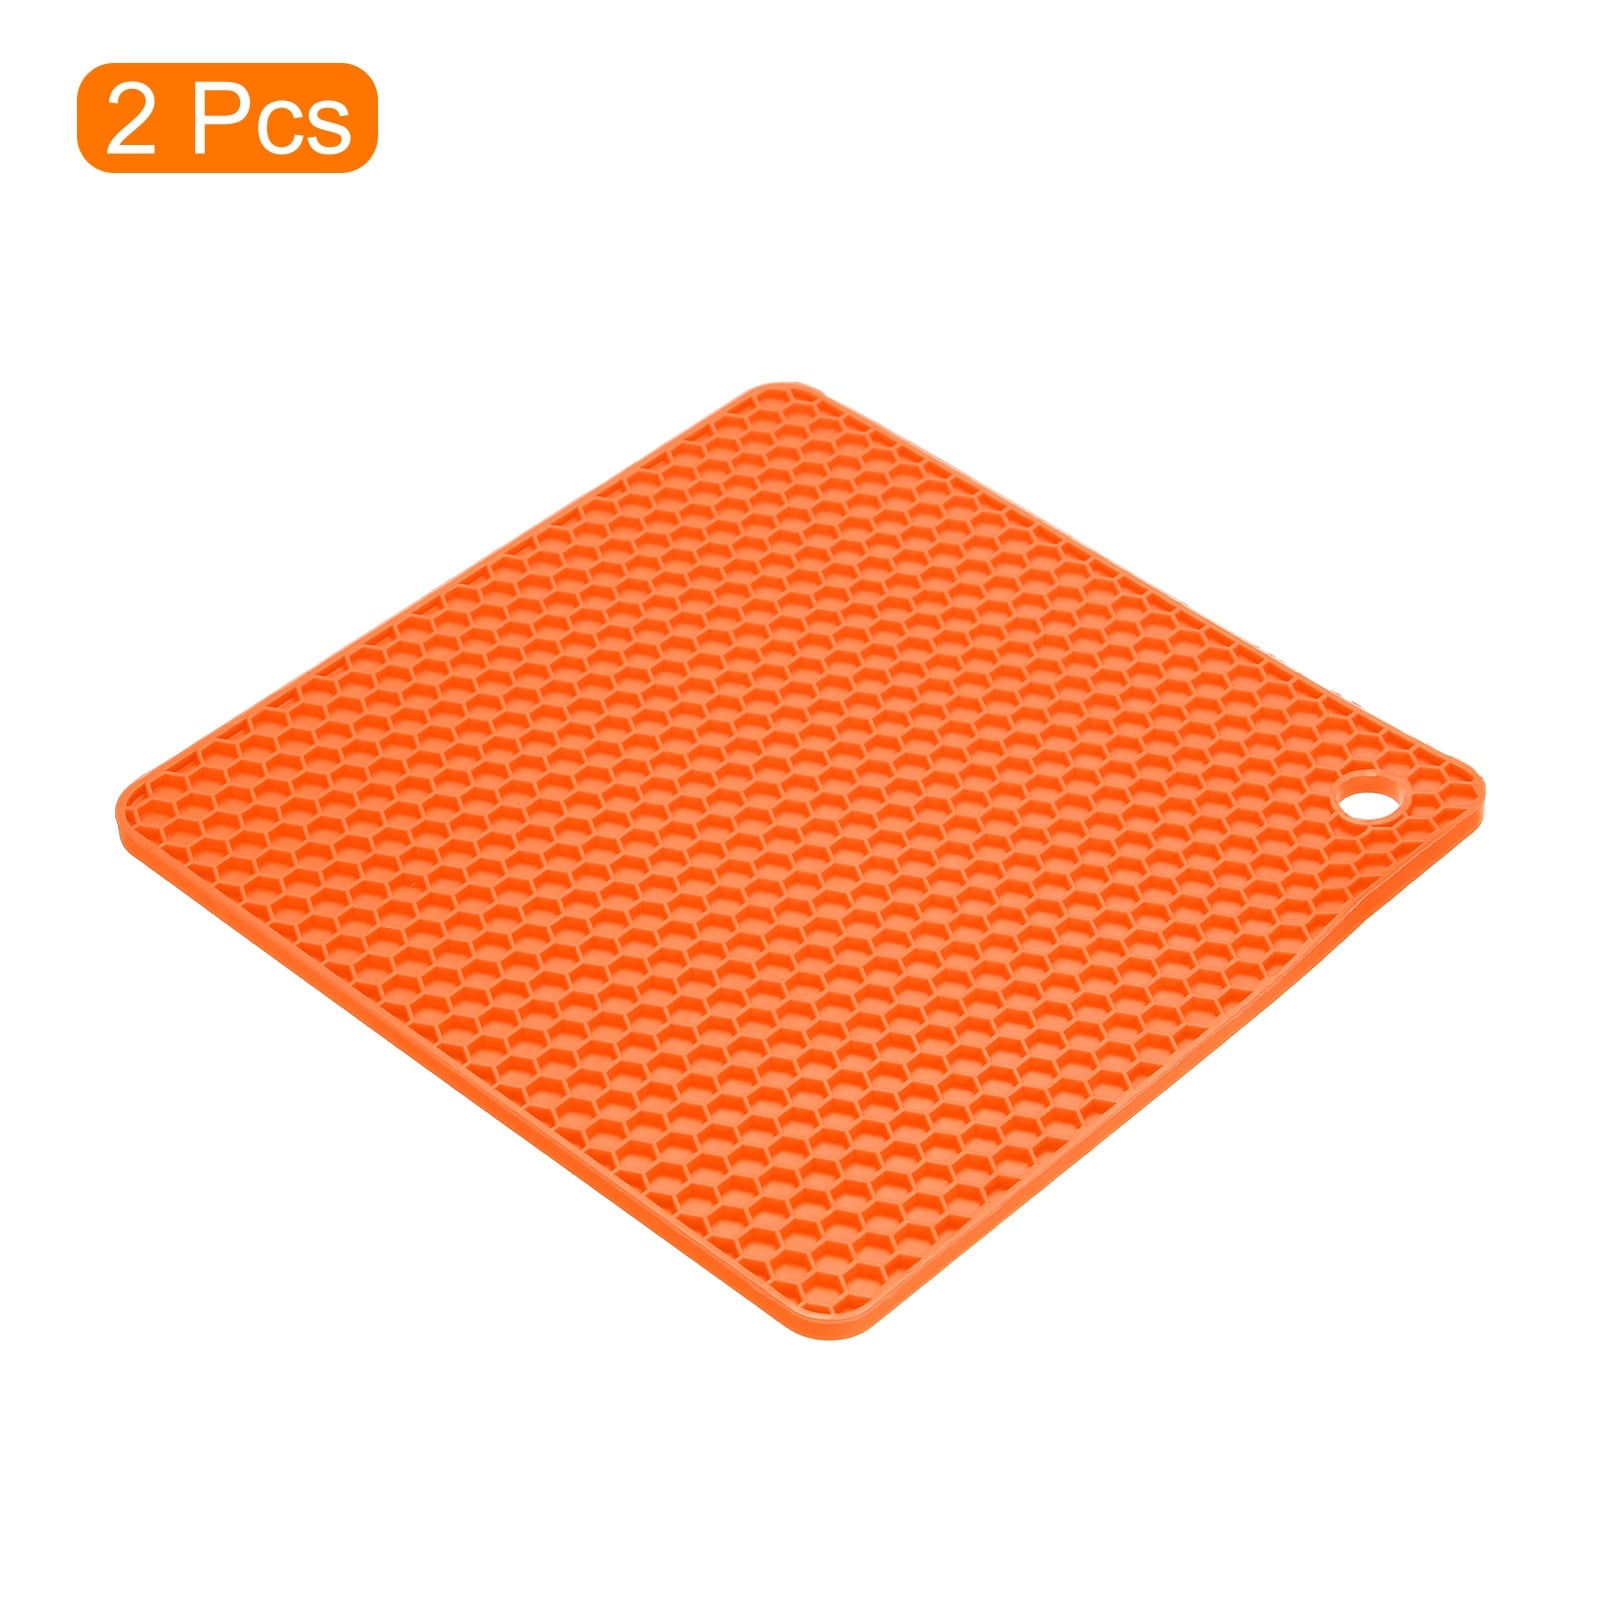 https://ak1.ostkcdn.com/images/products/is/images/direct/243d0d38f04aa45d5d1d8918ca5cc1100aa00a2a/Silicone-Trivet-Mats-2pcs%2C-Square-Hot-Pan-Pads-Hot-Pot-Holder---Orange.jpg